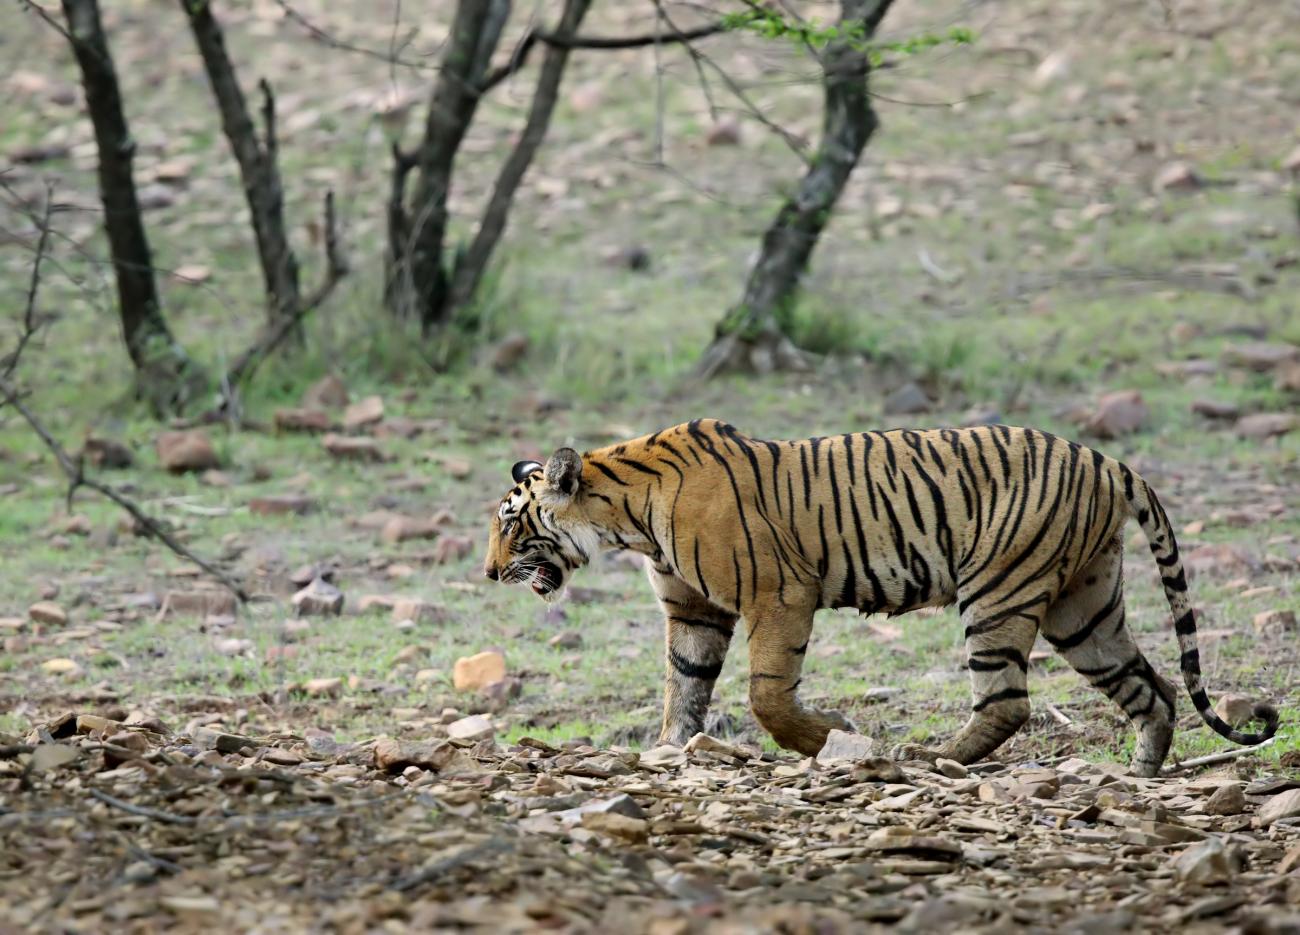 Spot tigers when visiting Ranthambore